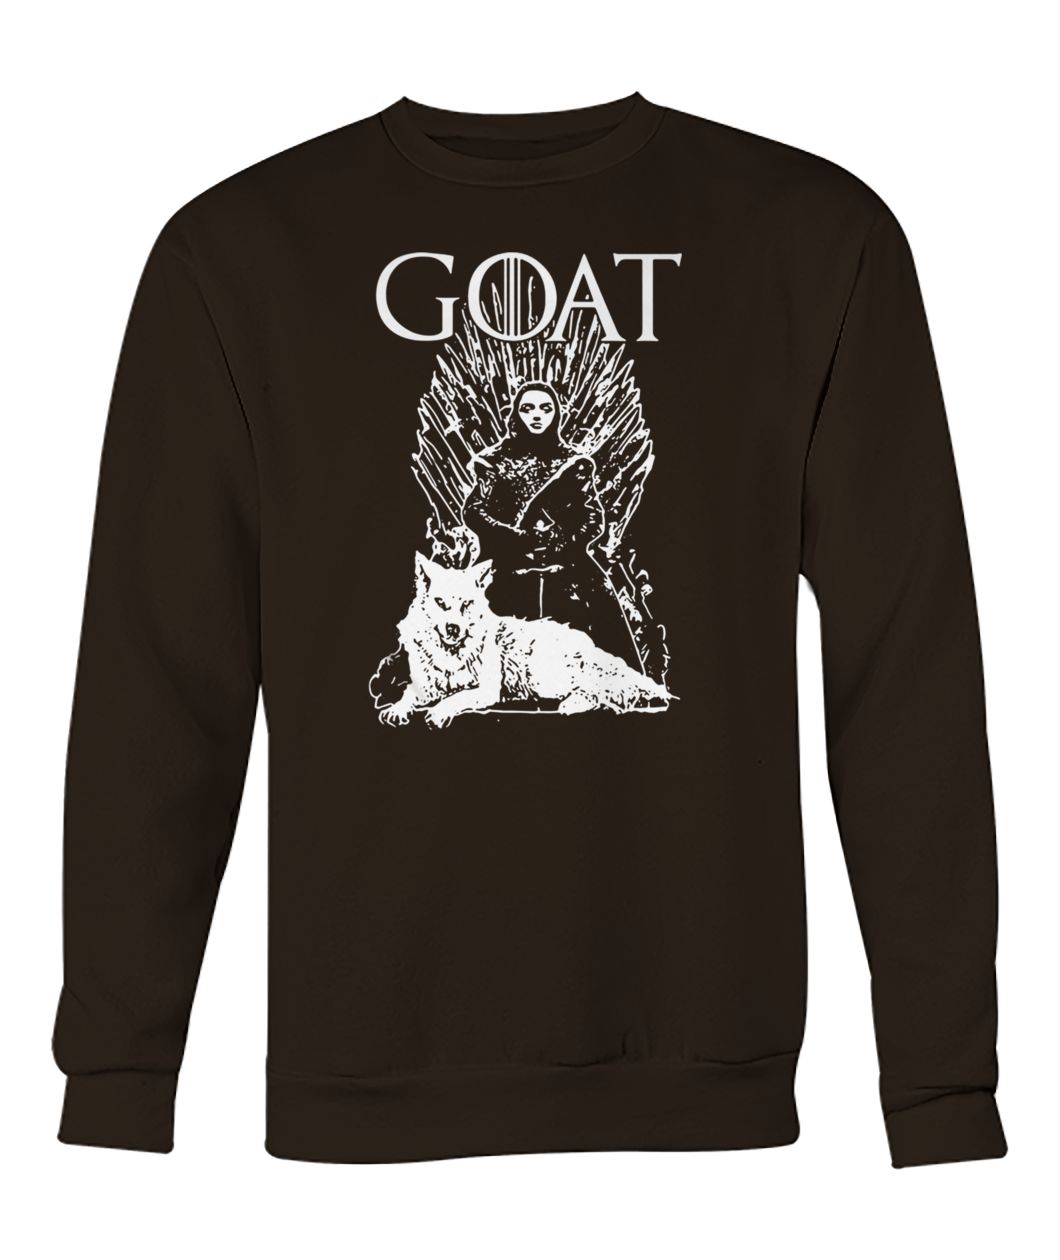 Game of thrones arya stark goat crew neck sweatshirt